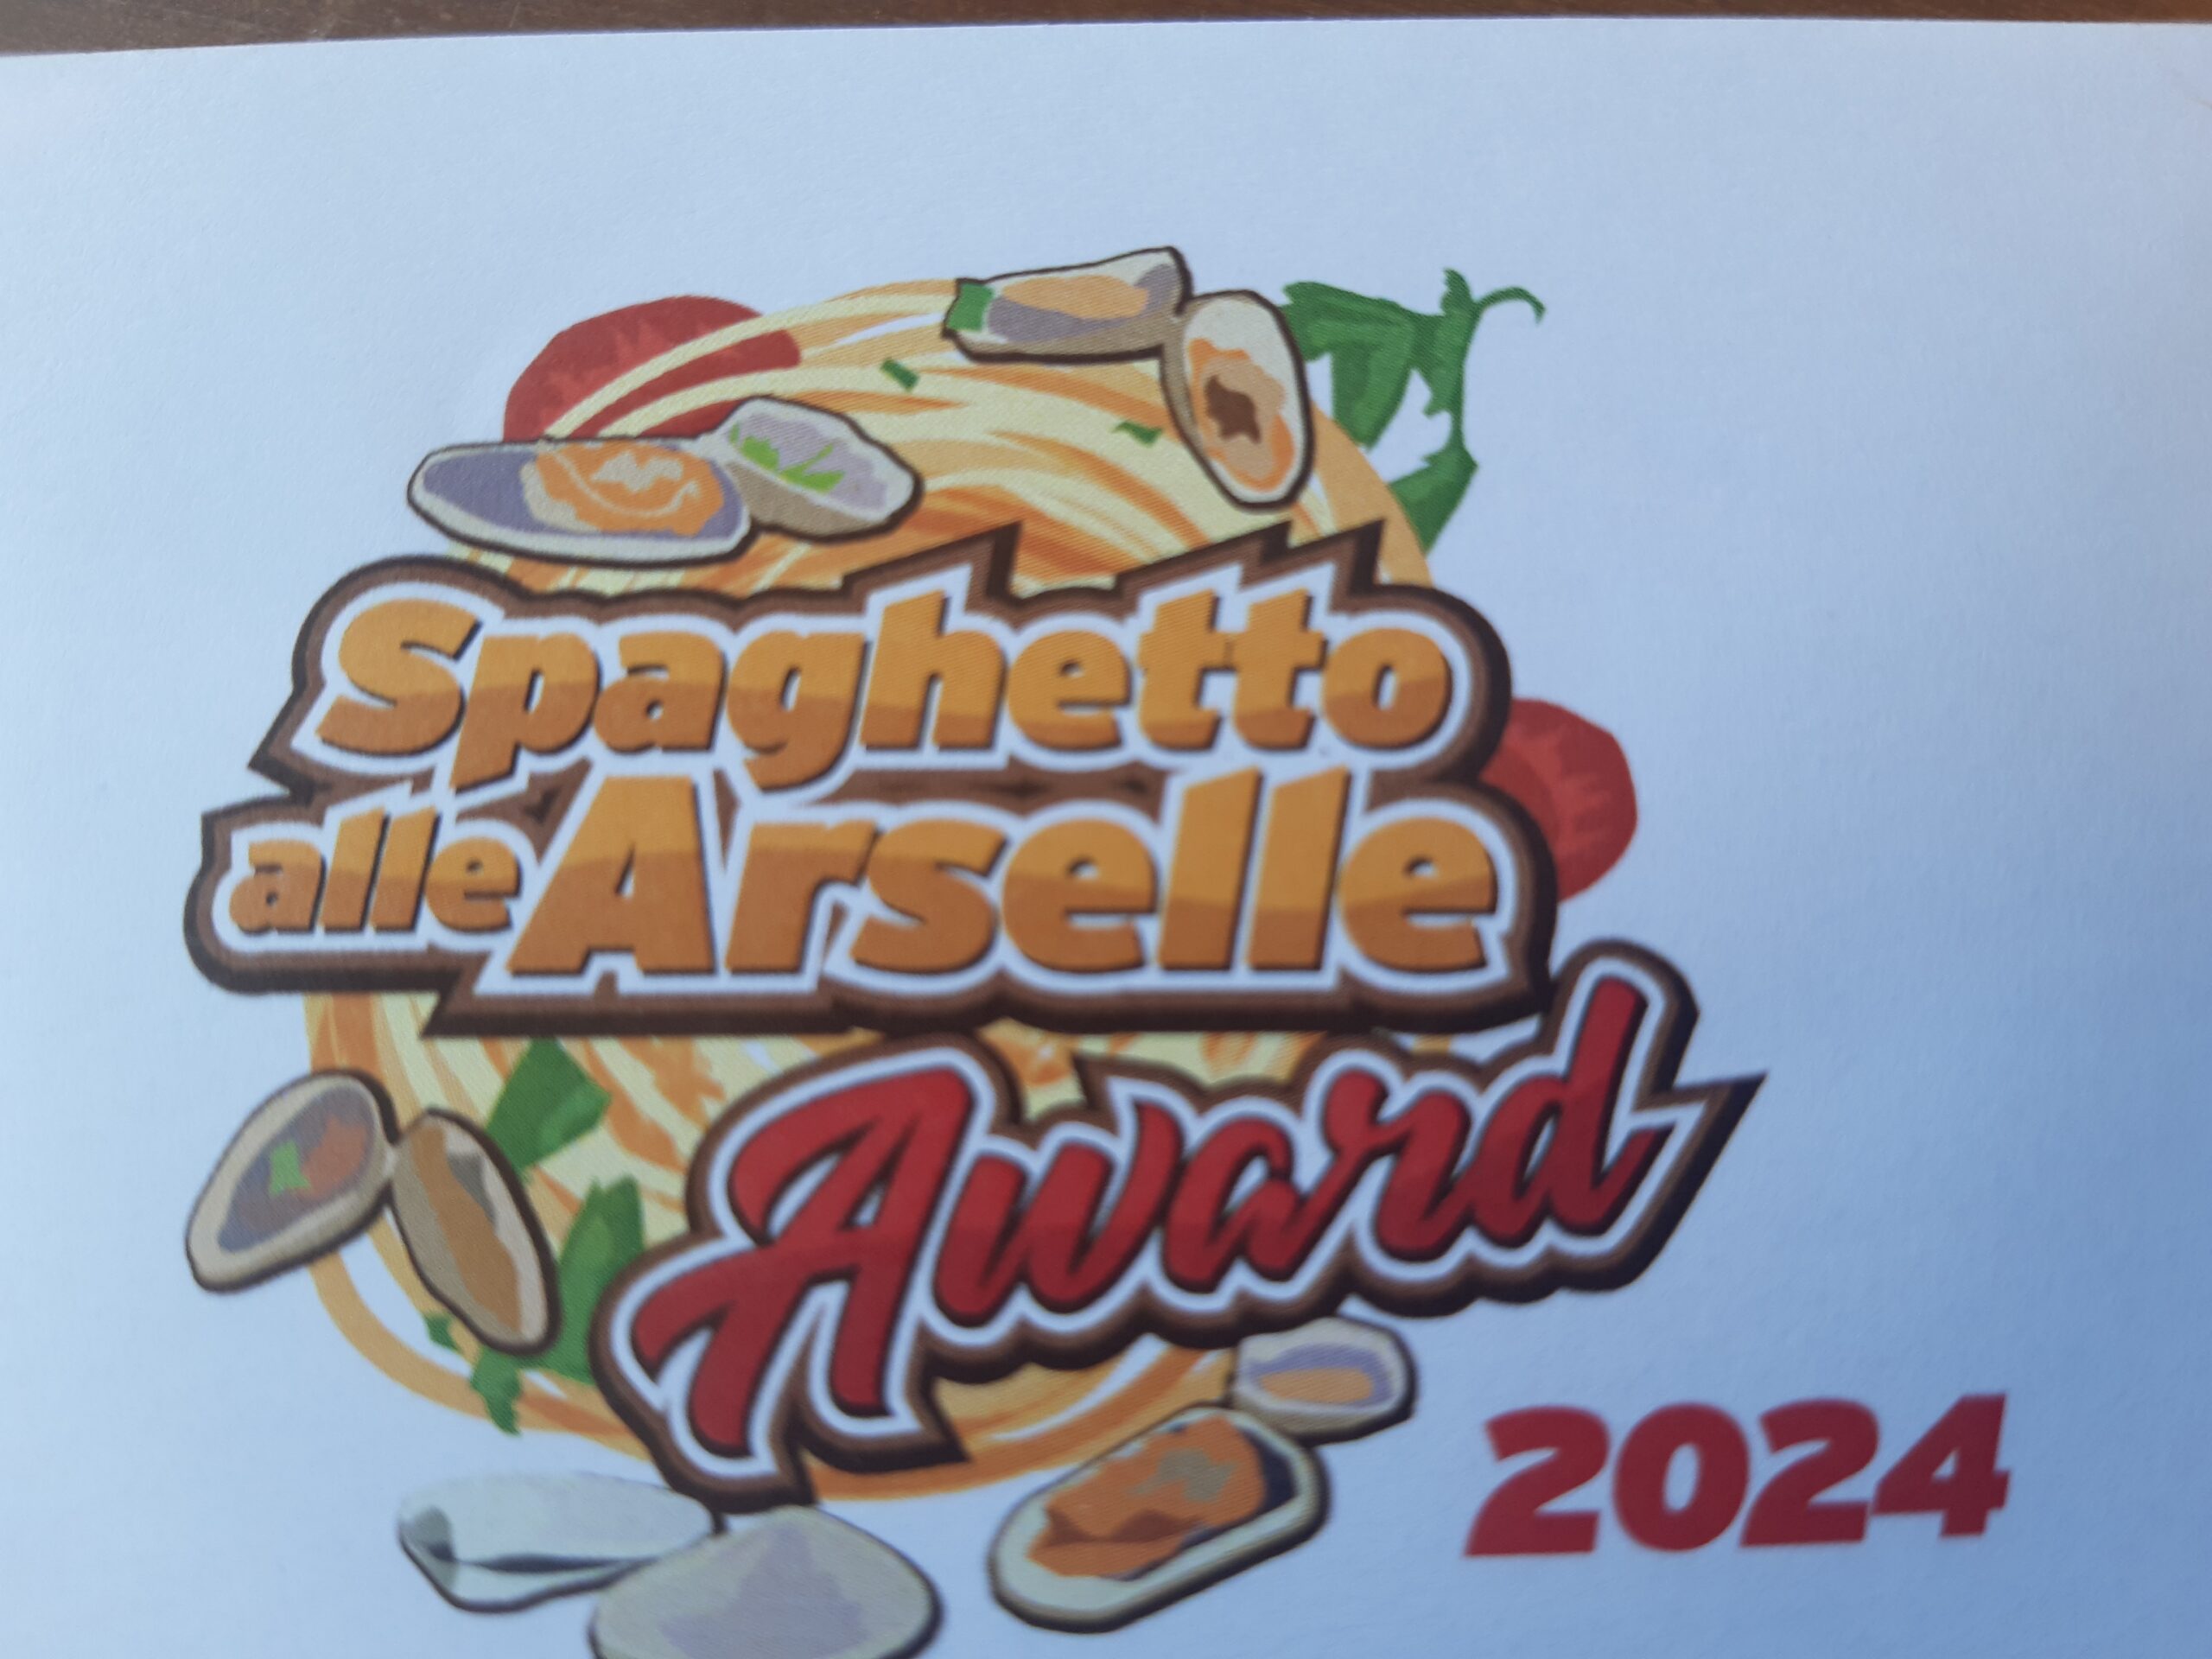 spaghetti arselle awards